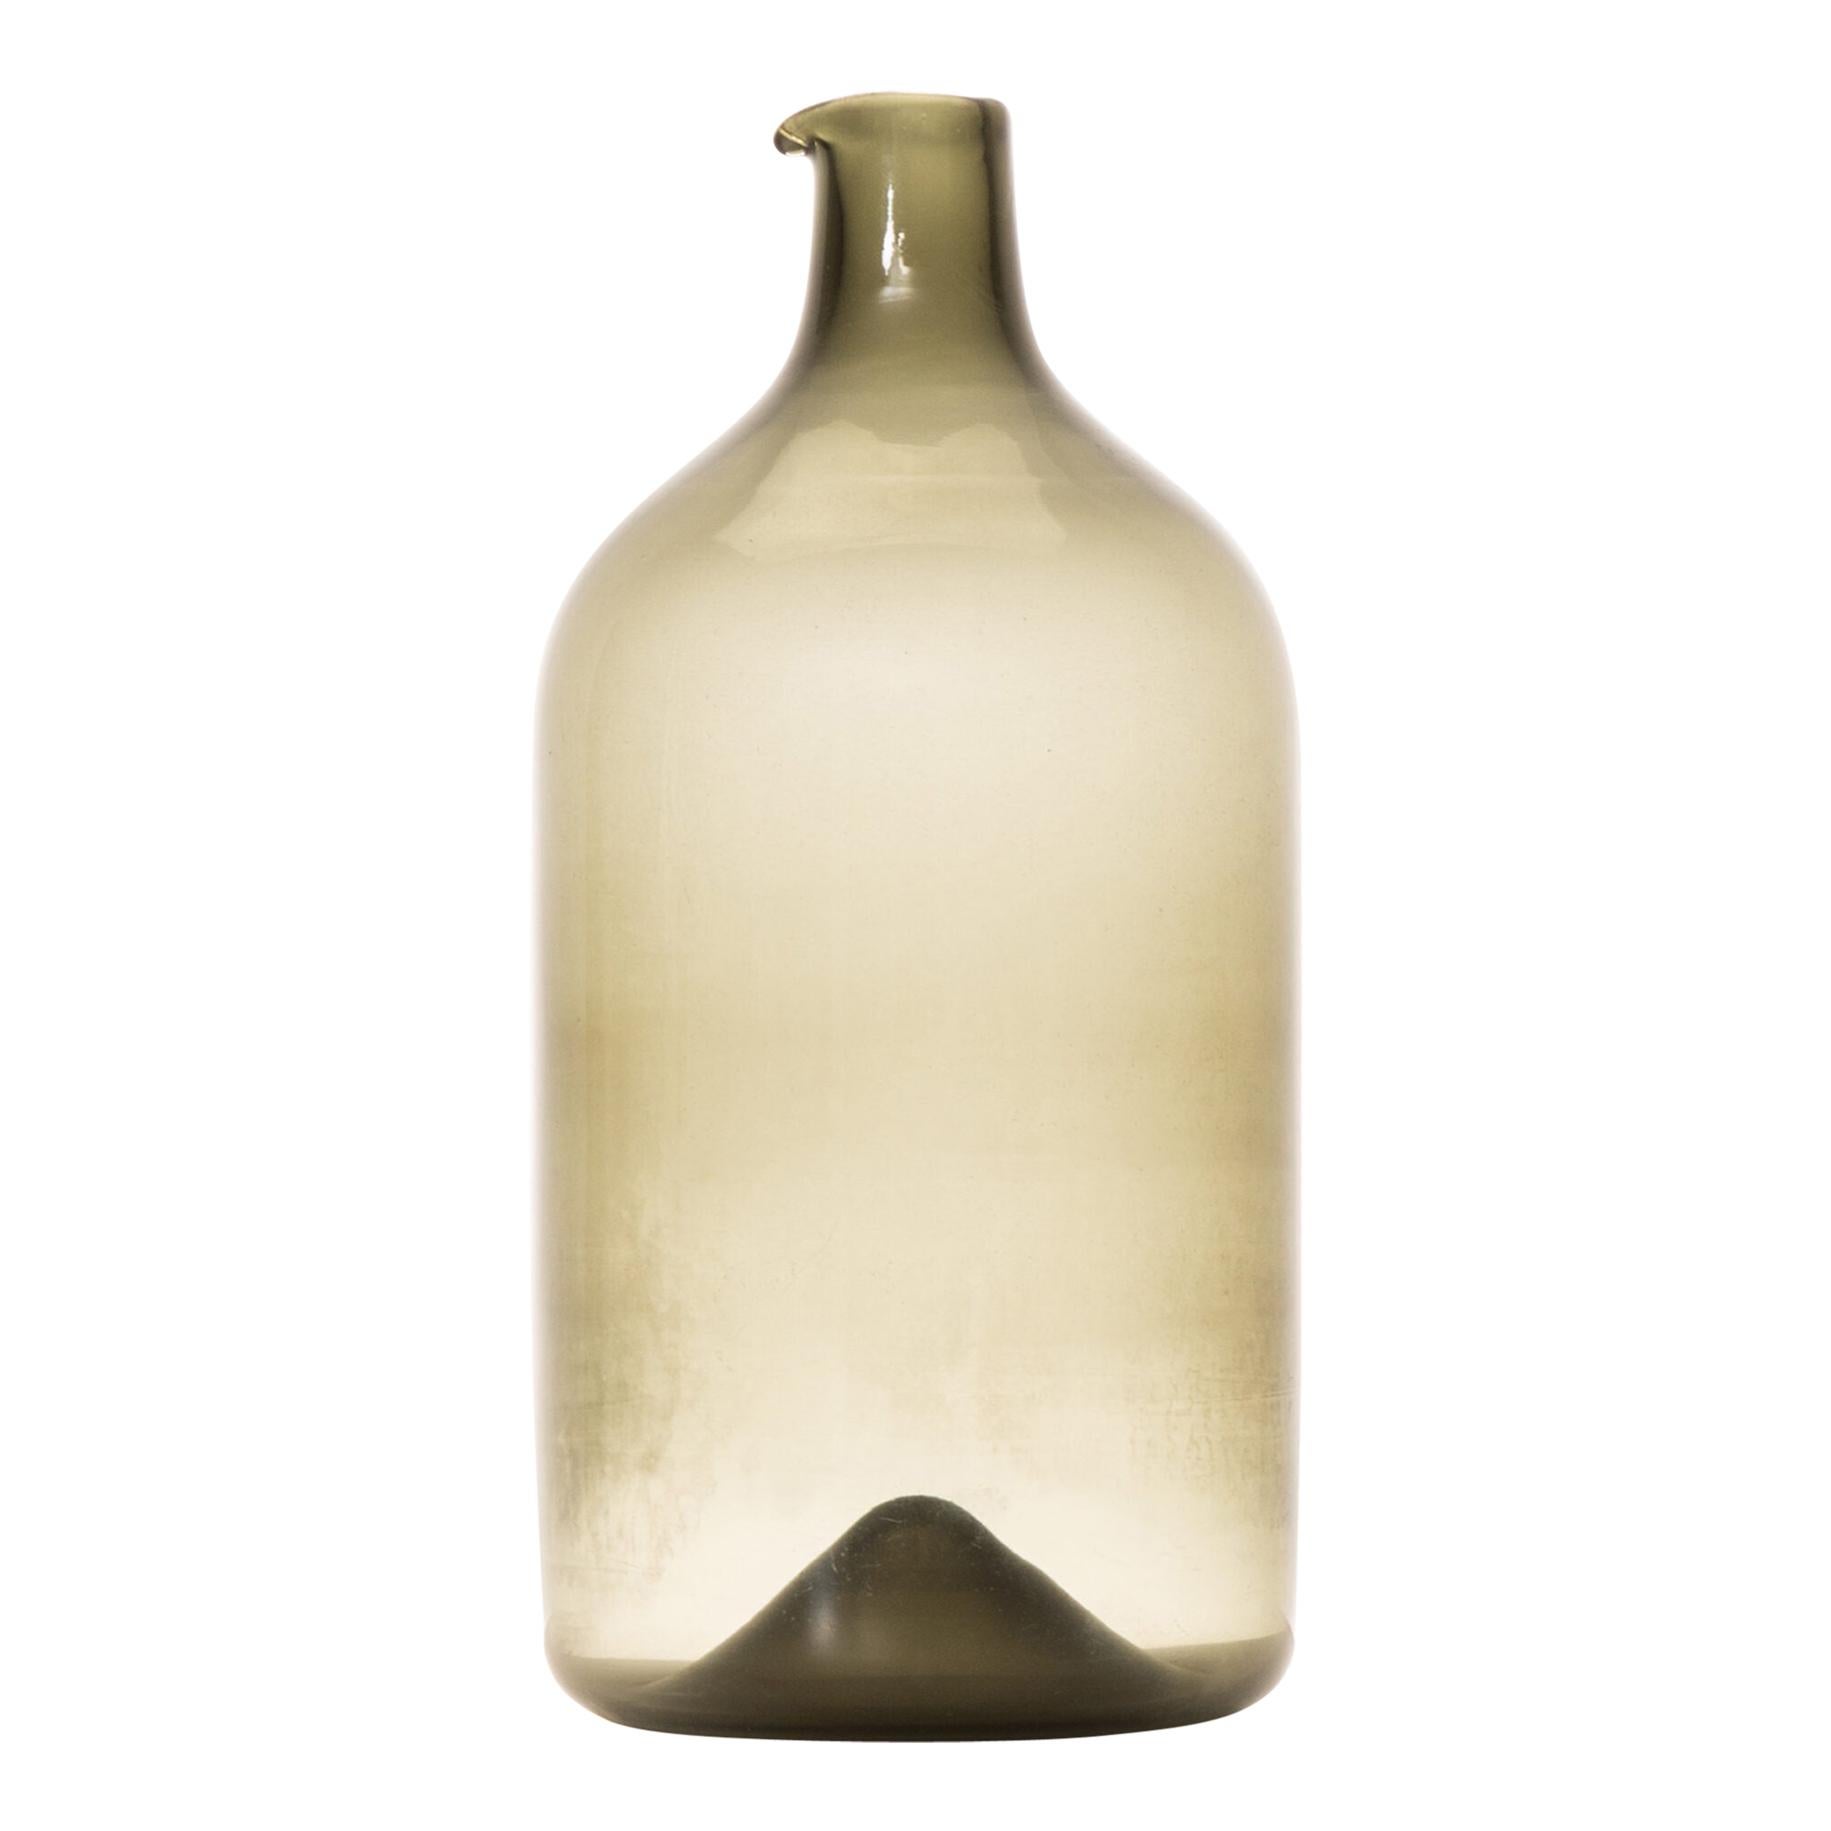 Timo Sarpaneva Glass Bottle / Vase Model Pullo / Bird by Iittala in Finland For Sale